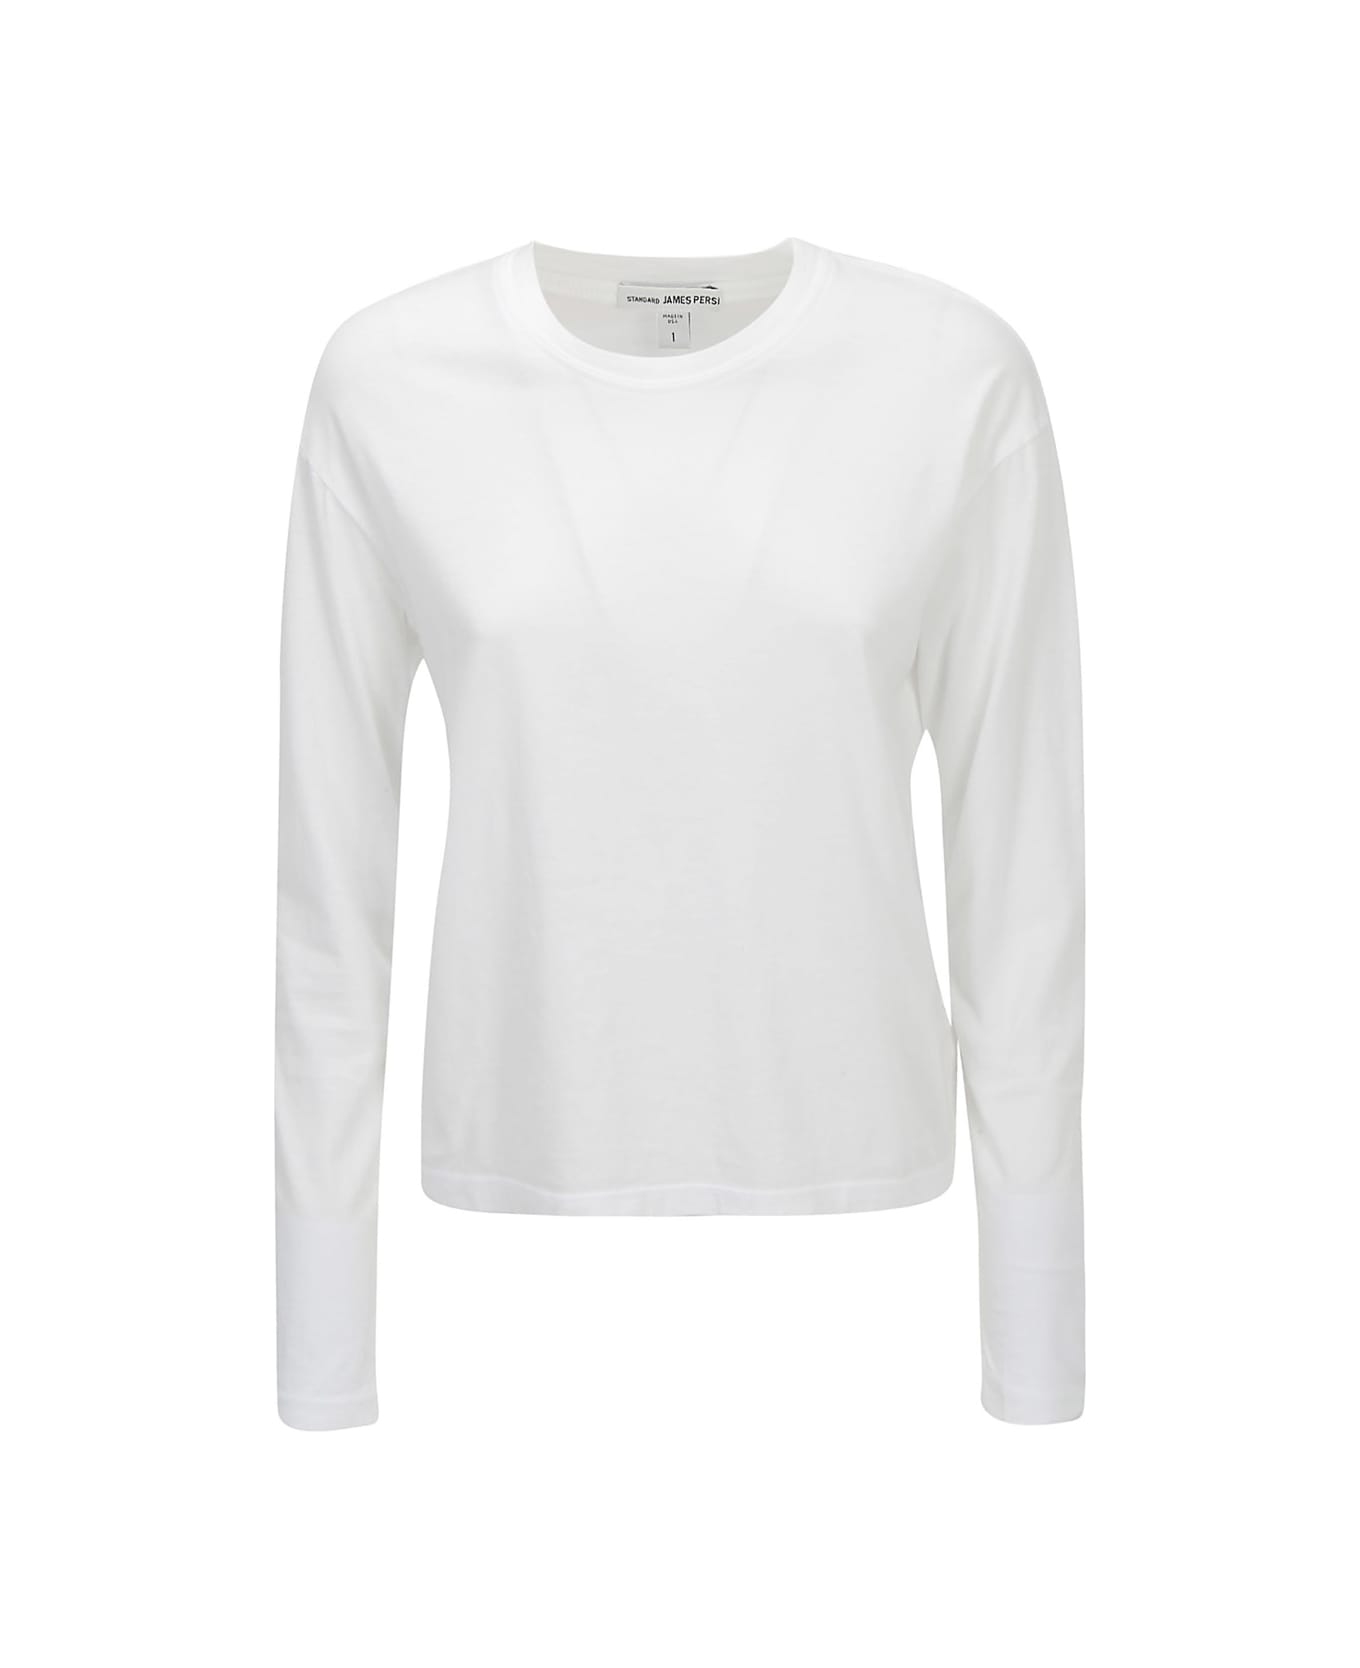 James Perse Sweatshirt - Wht White Tシャツ